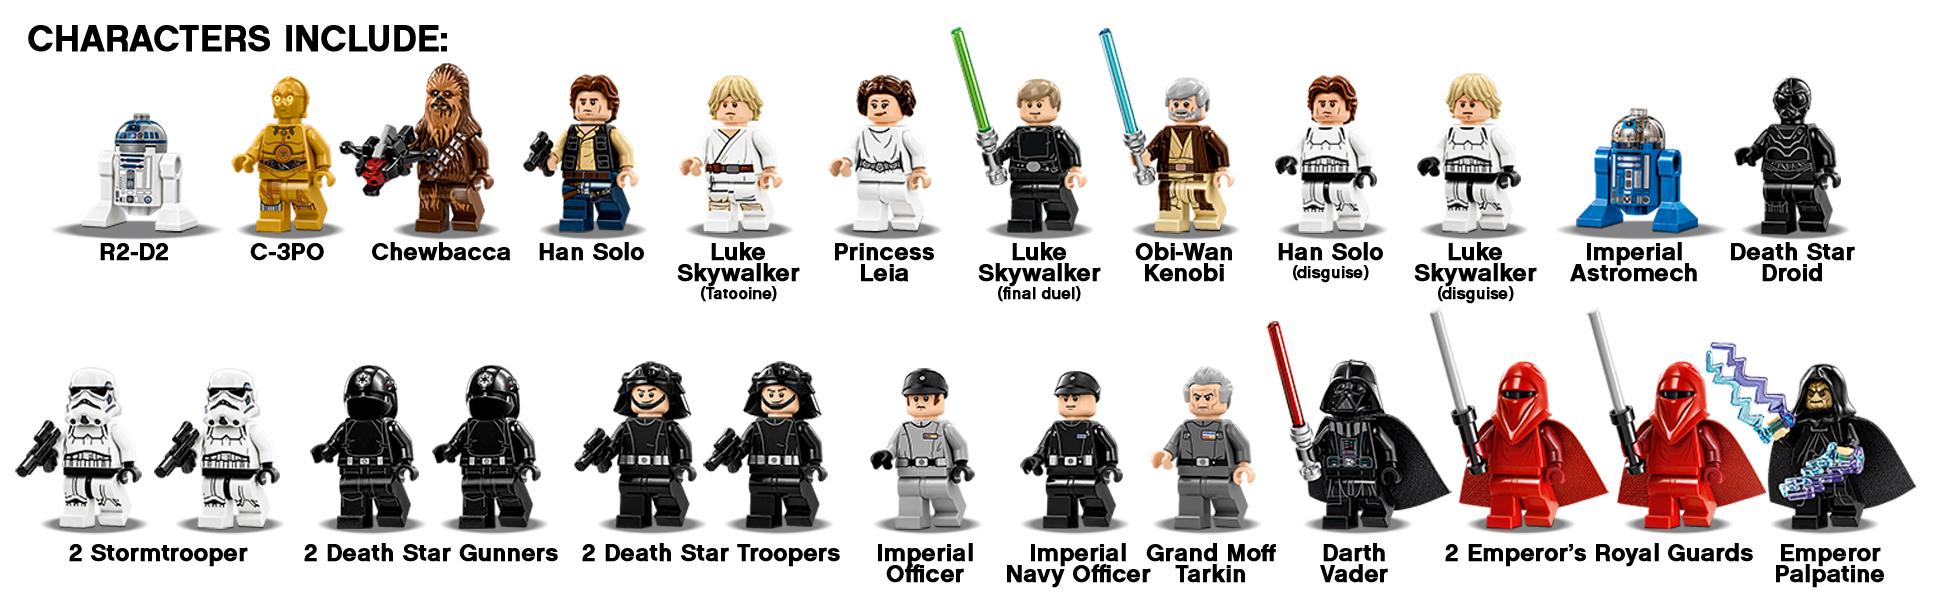 LEGO Star Wars: Death Star - 4016 Piece Building Kit [LEGO, #75159, Ages 14+]